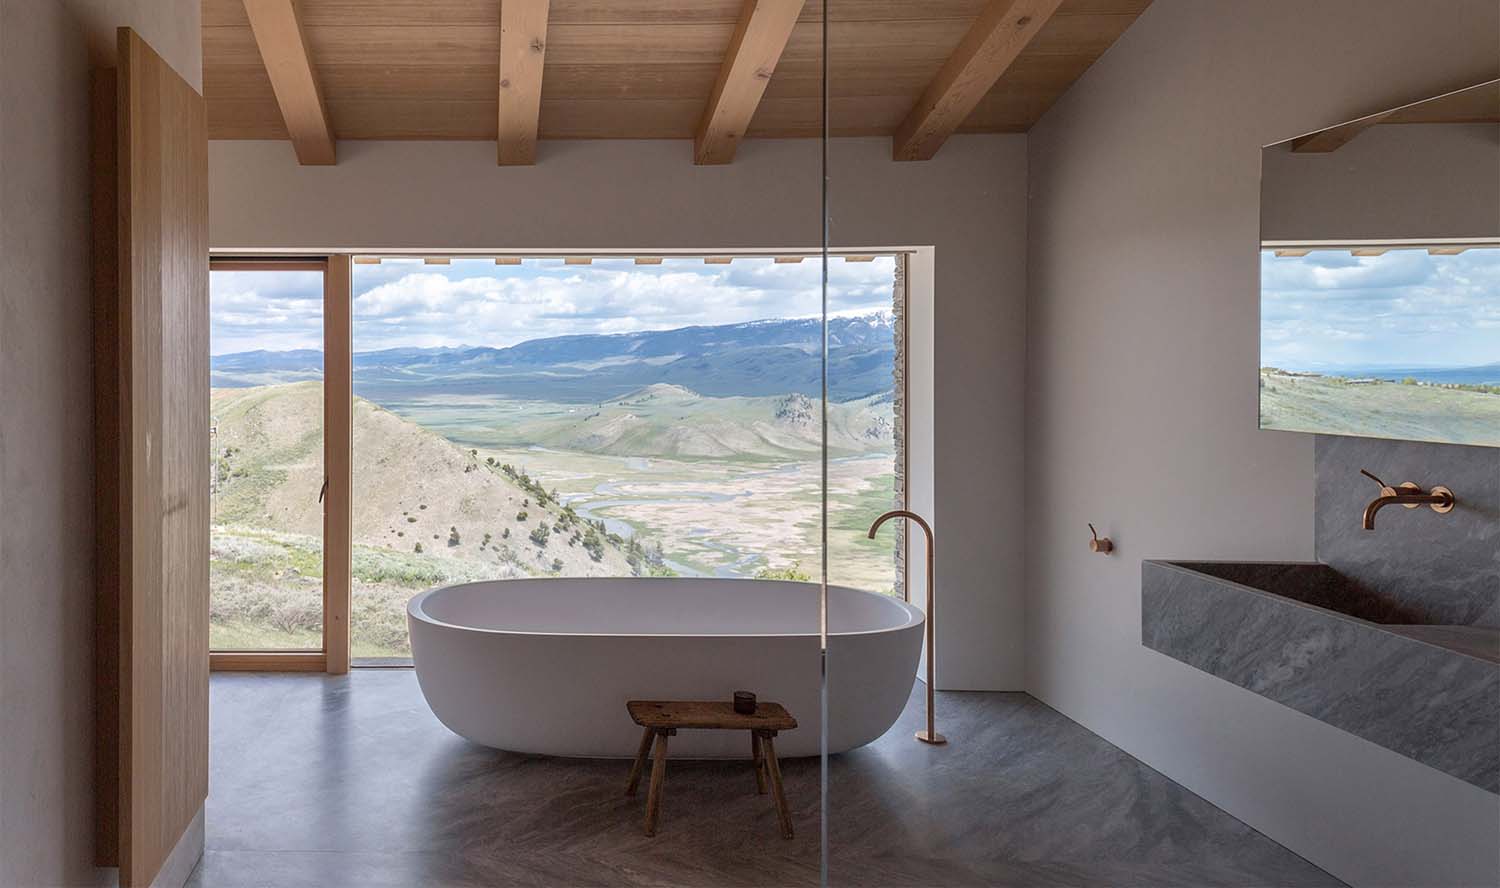 A minimally designed home perched over the Teton Mountain Range